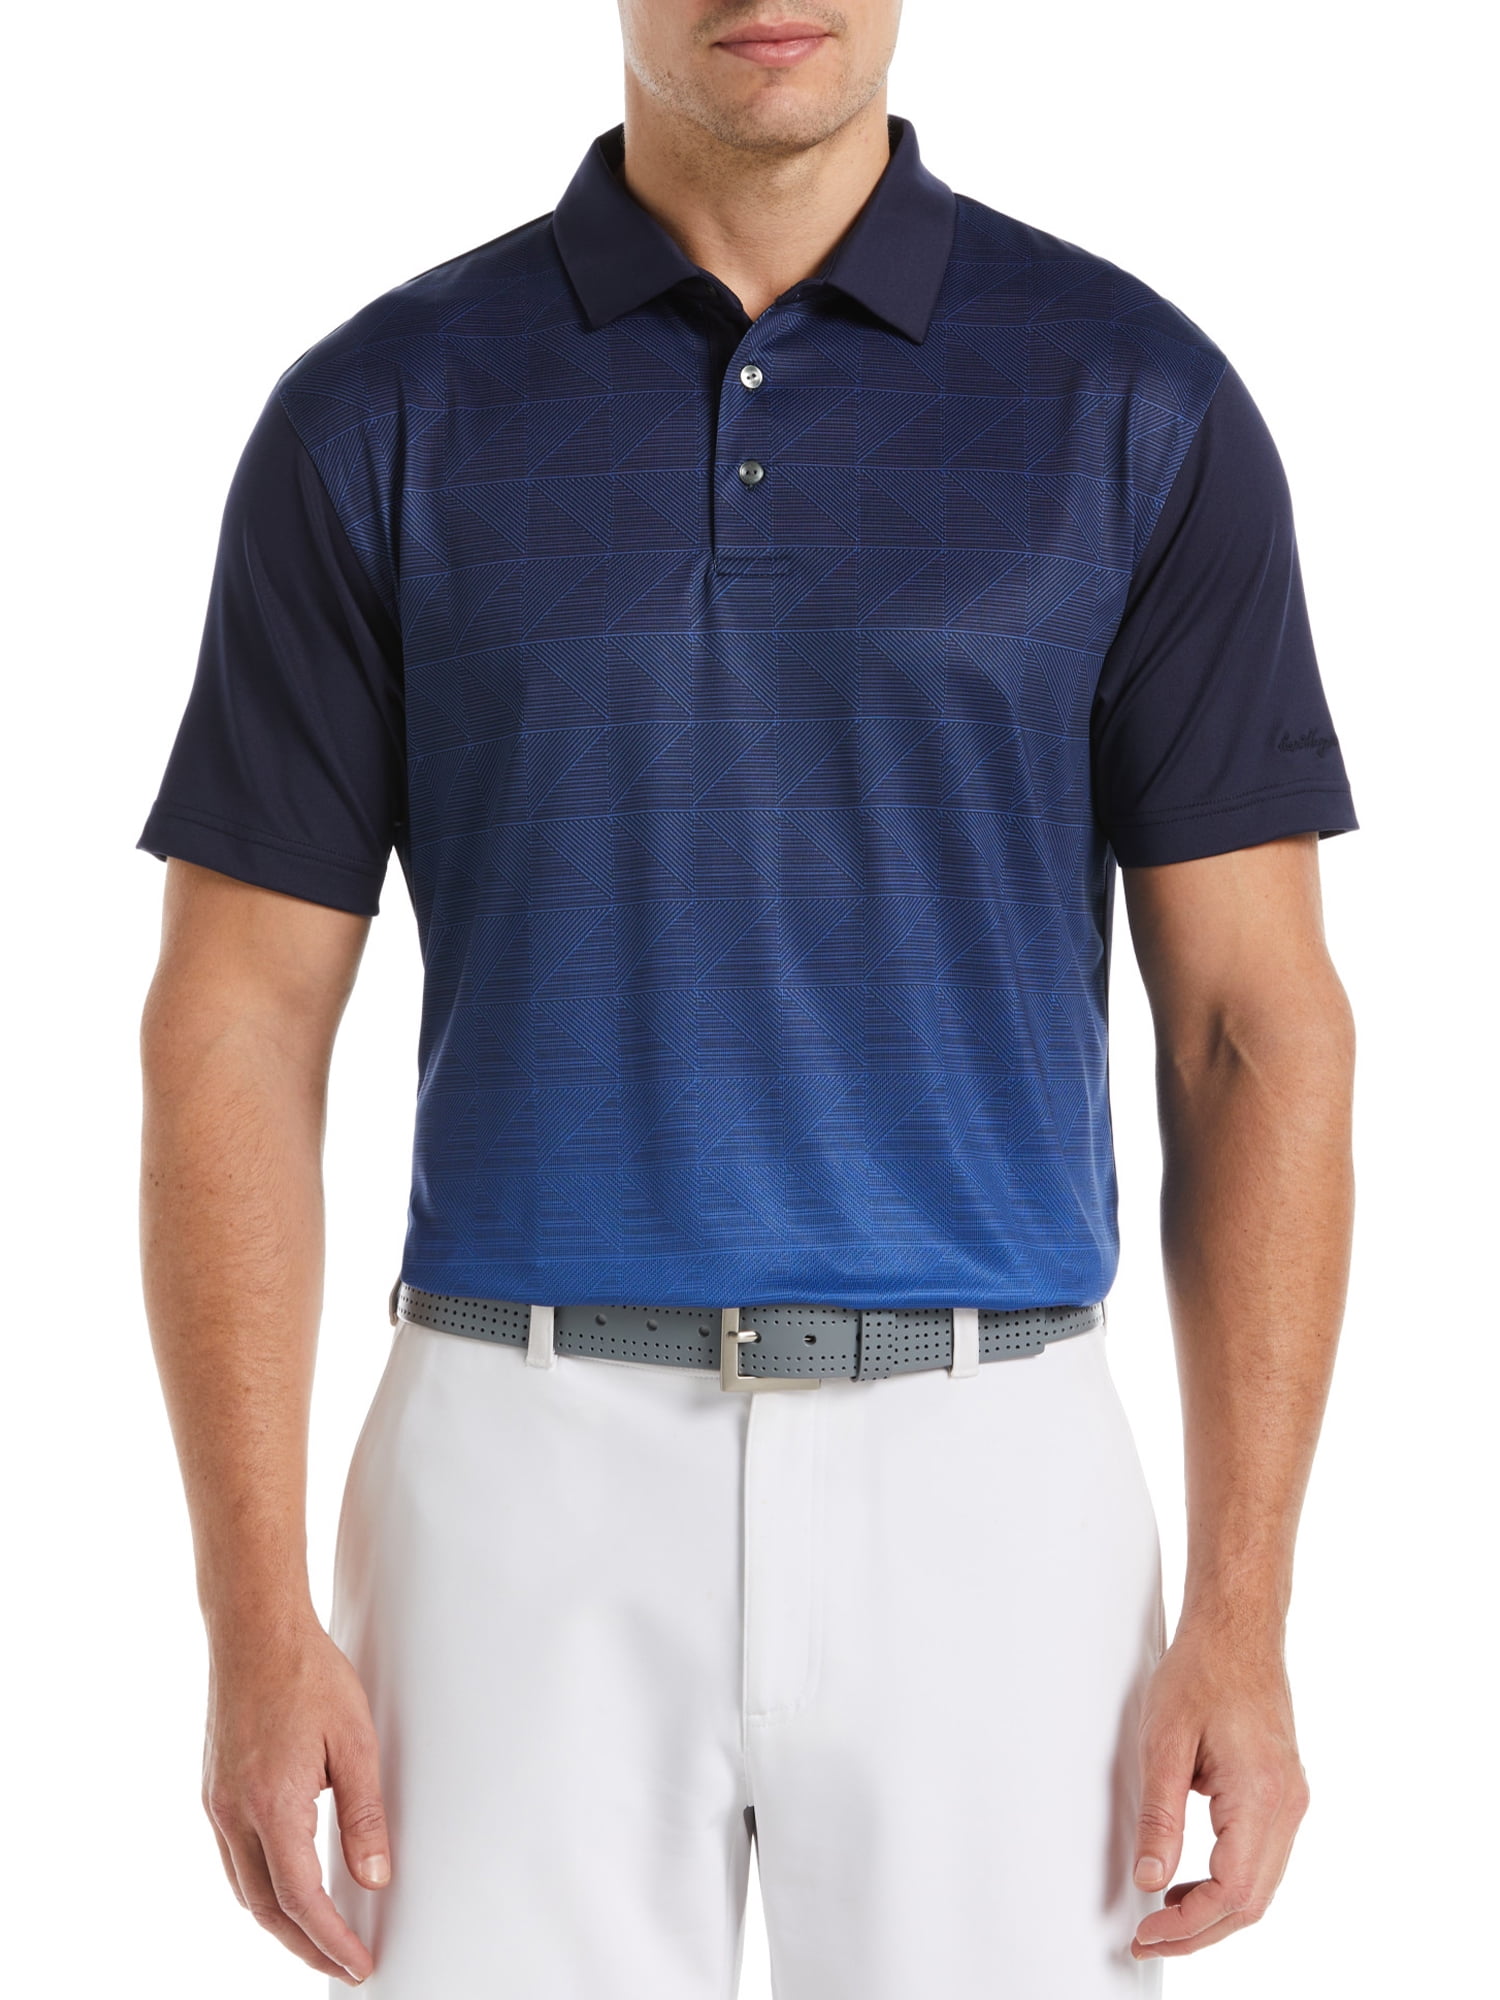 Ben Hogan Performance Men's Fading Geo Print Golf Polo Shirt